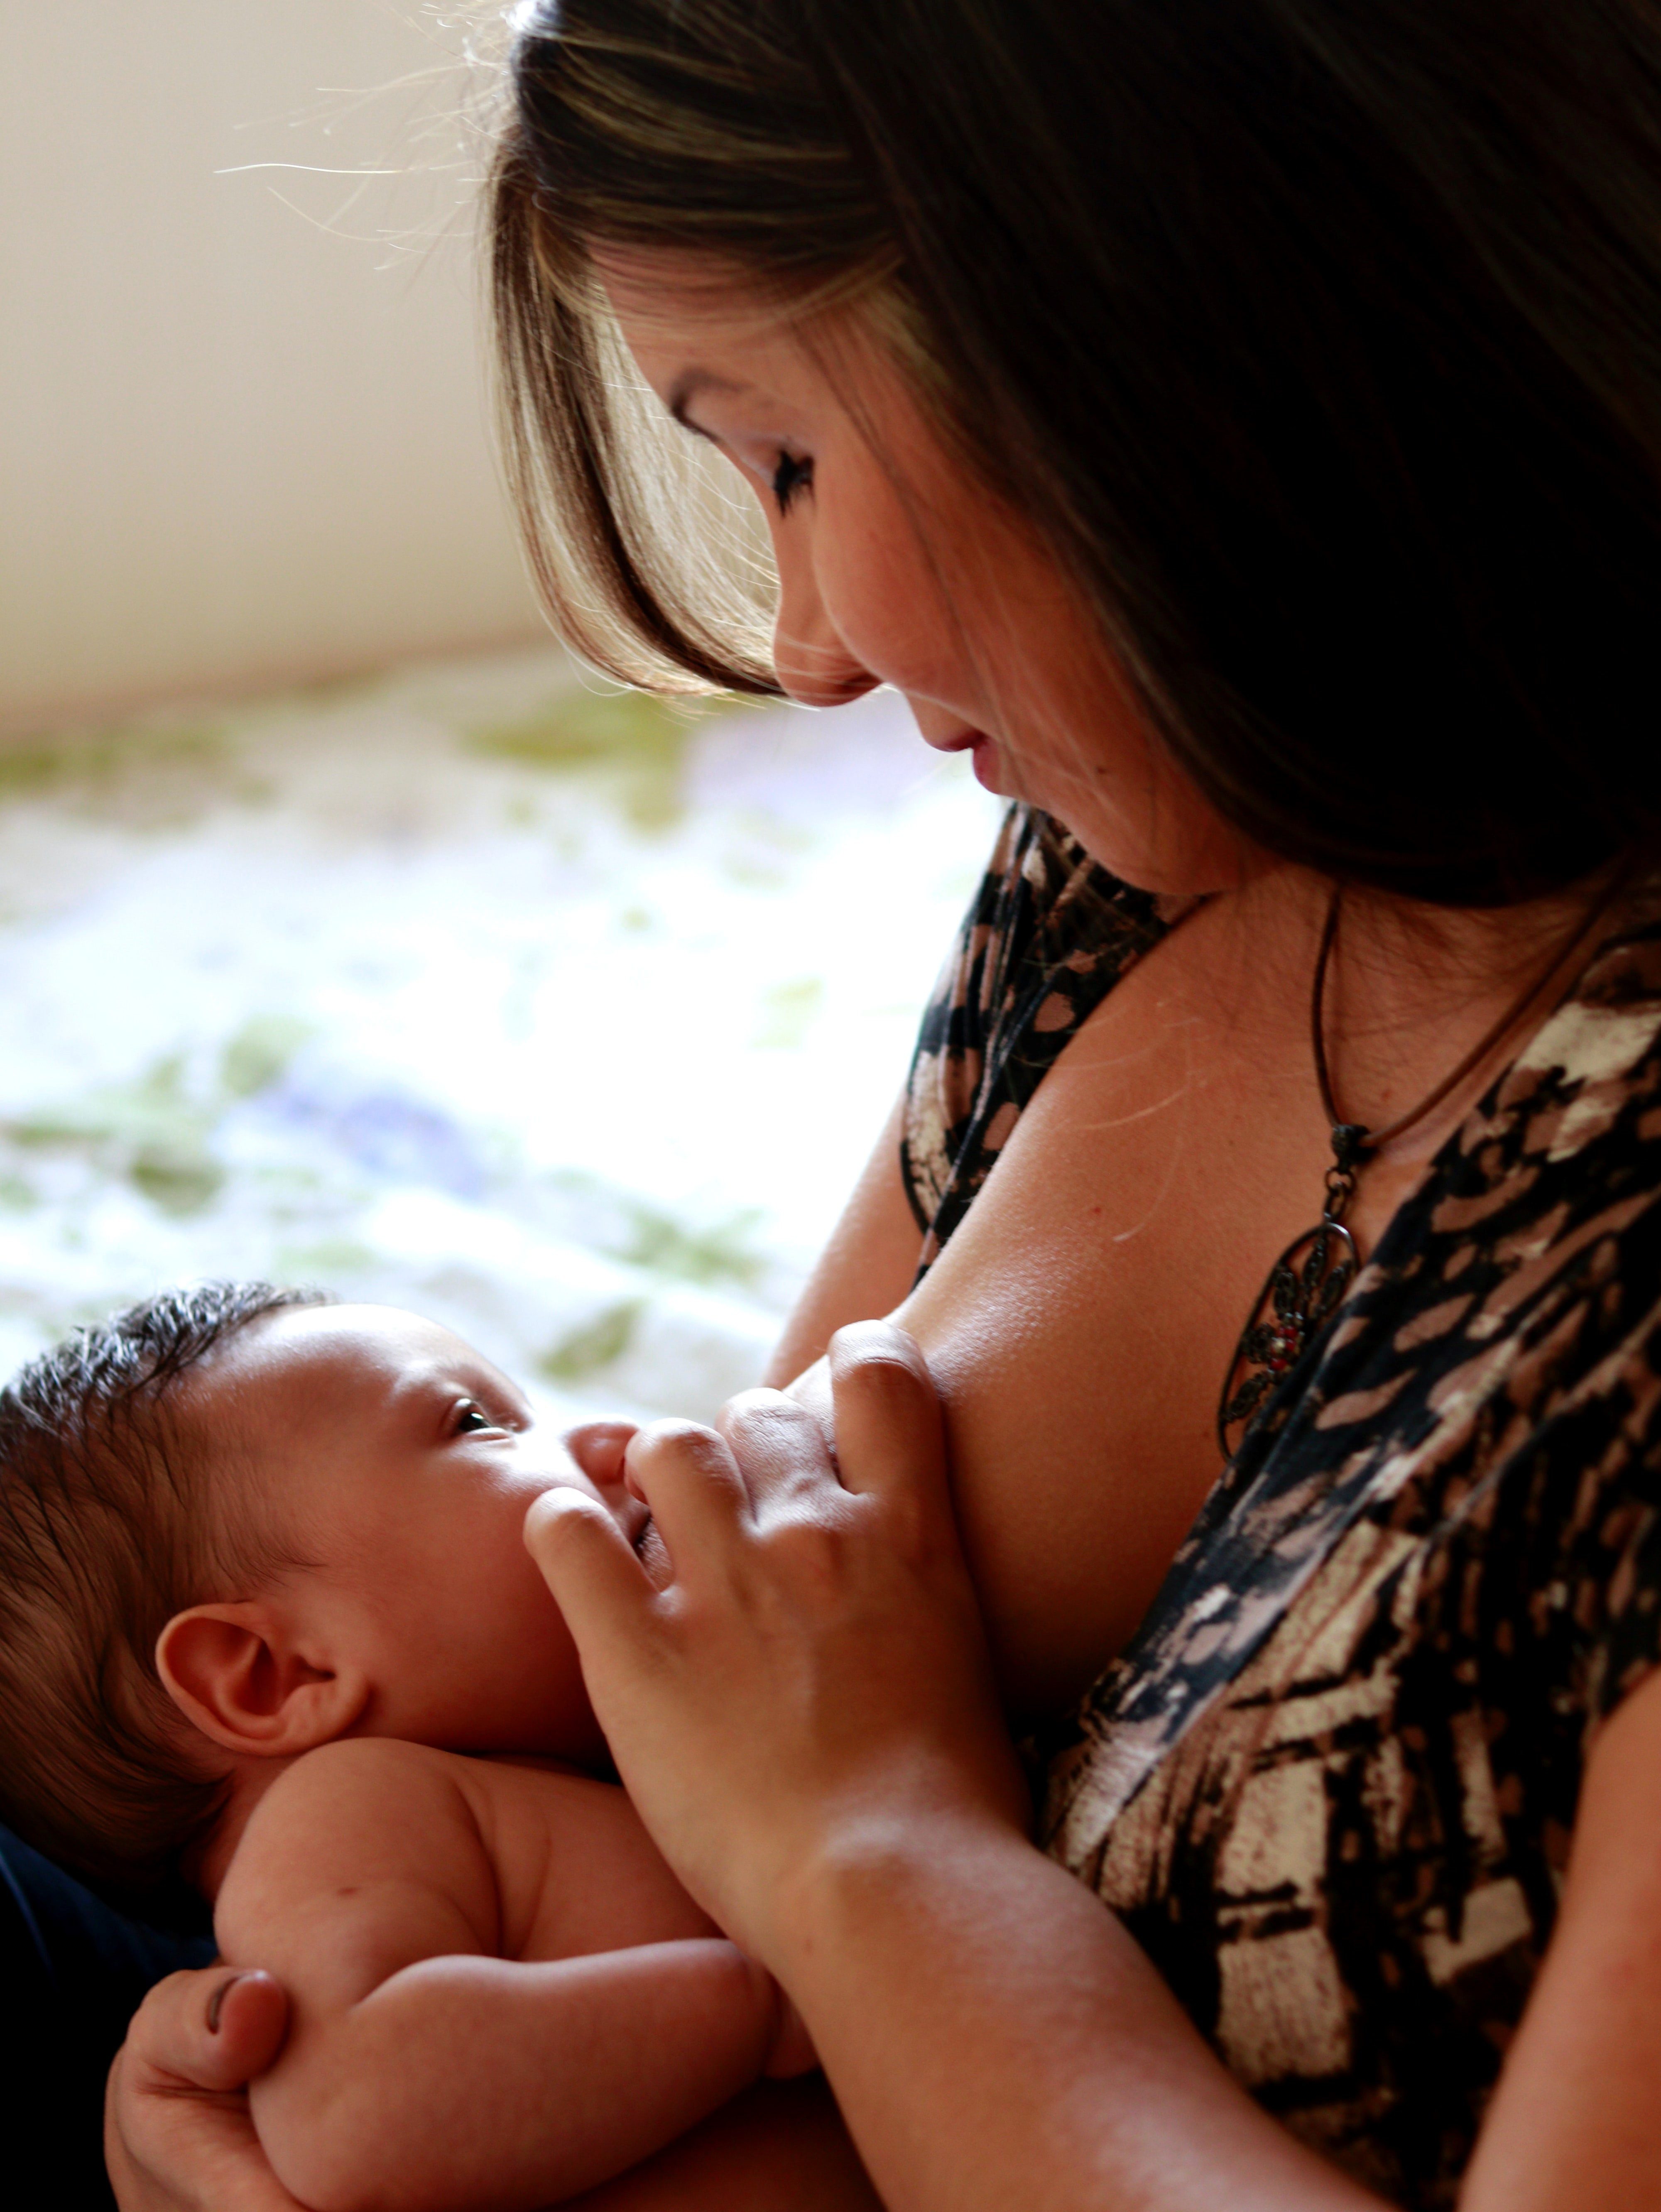 A woman breast feeding her baby